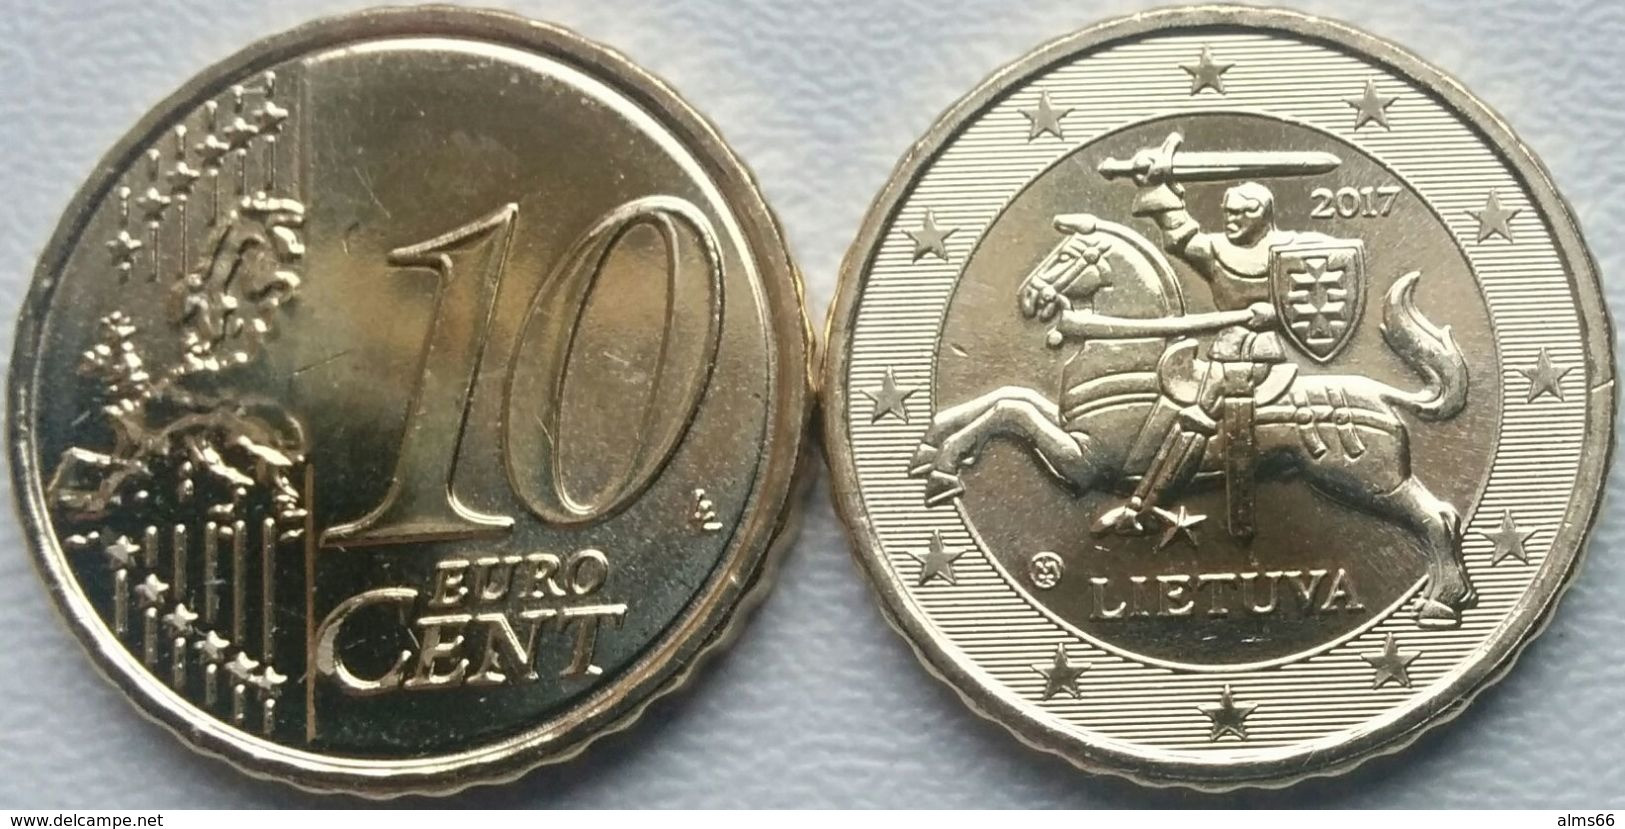 EuroCoins < Lithuania > 10 Cents 2017 UNC - Lithuania